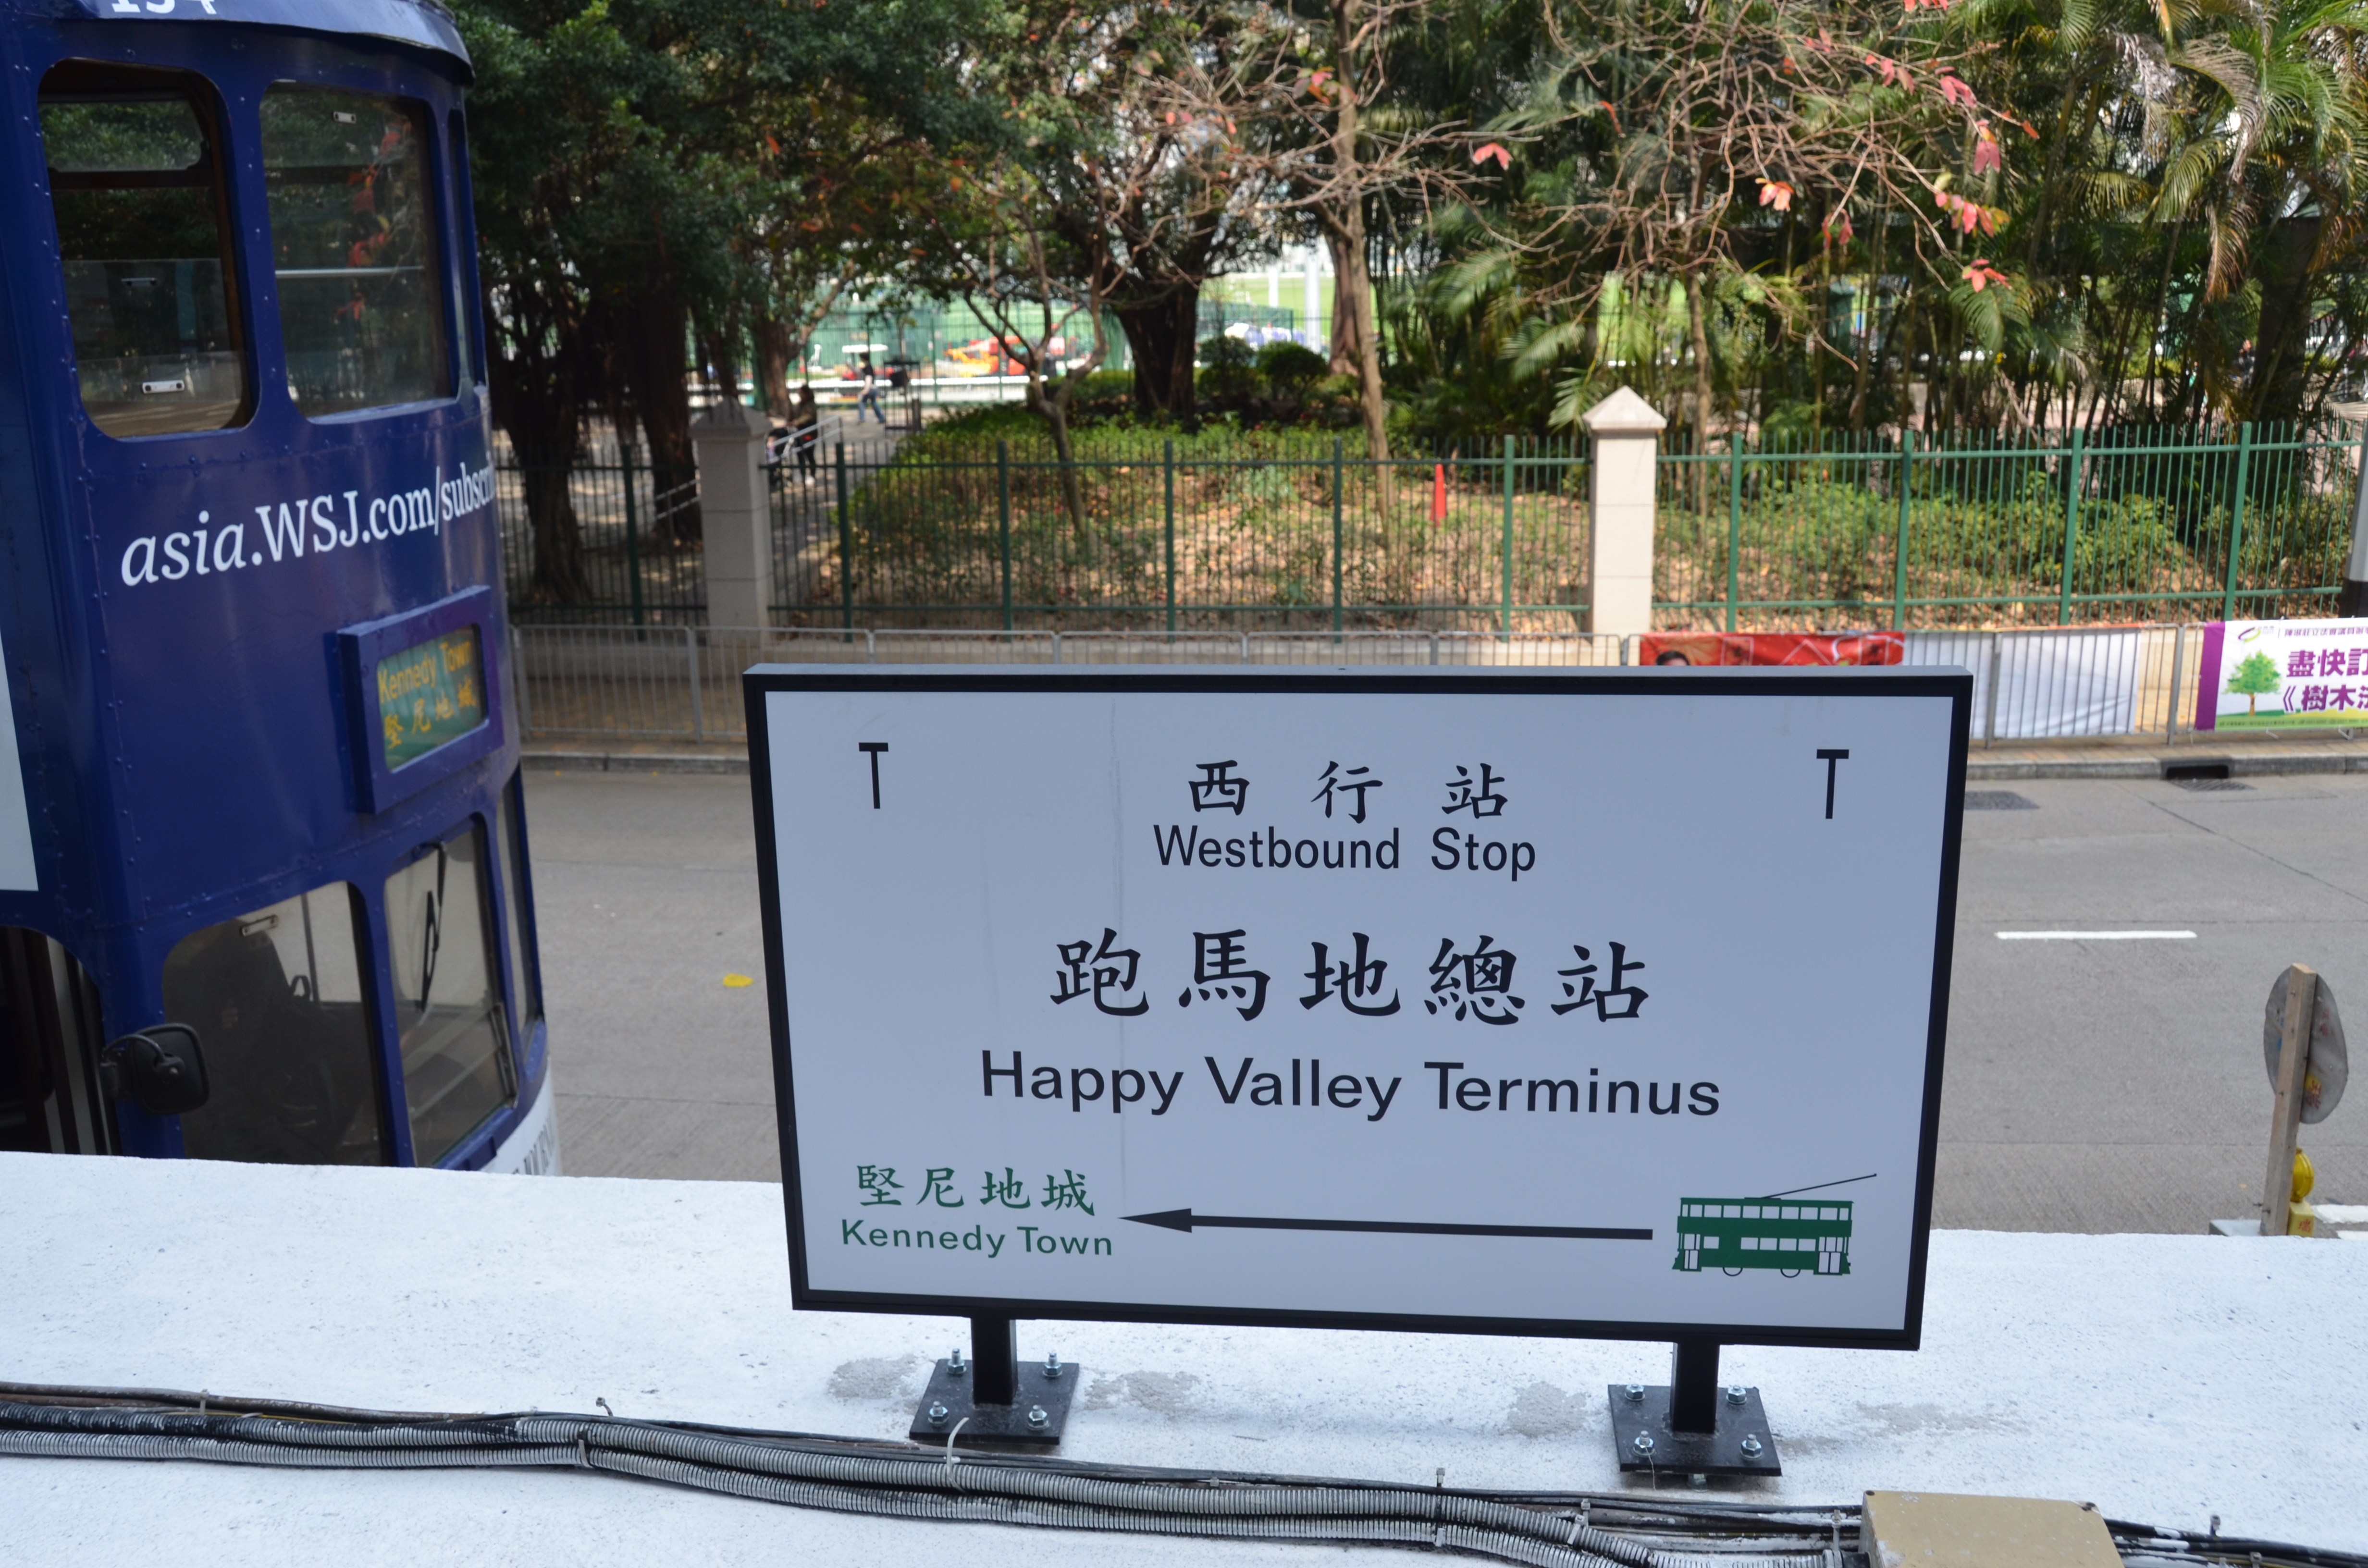 In celebration of Hong Kong trams